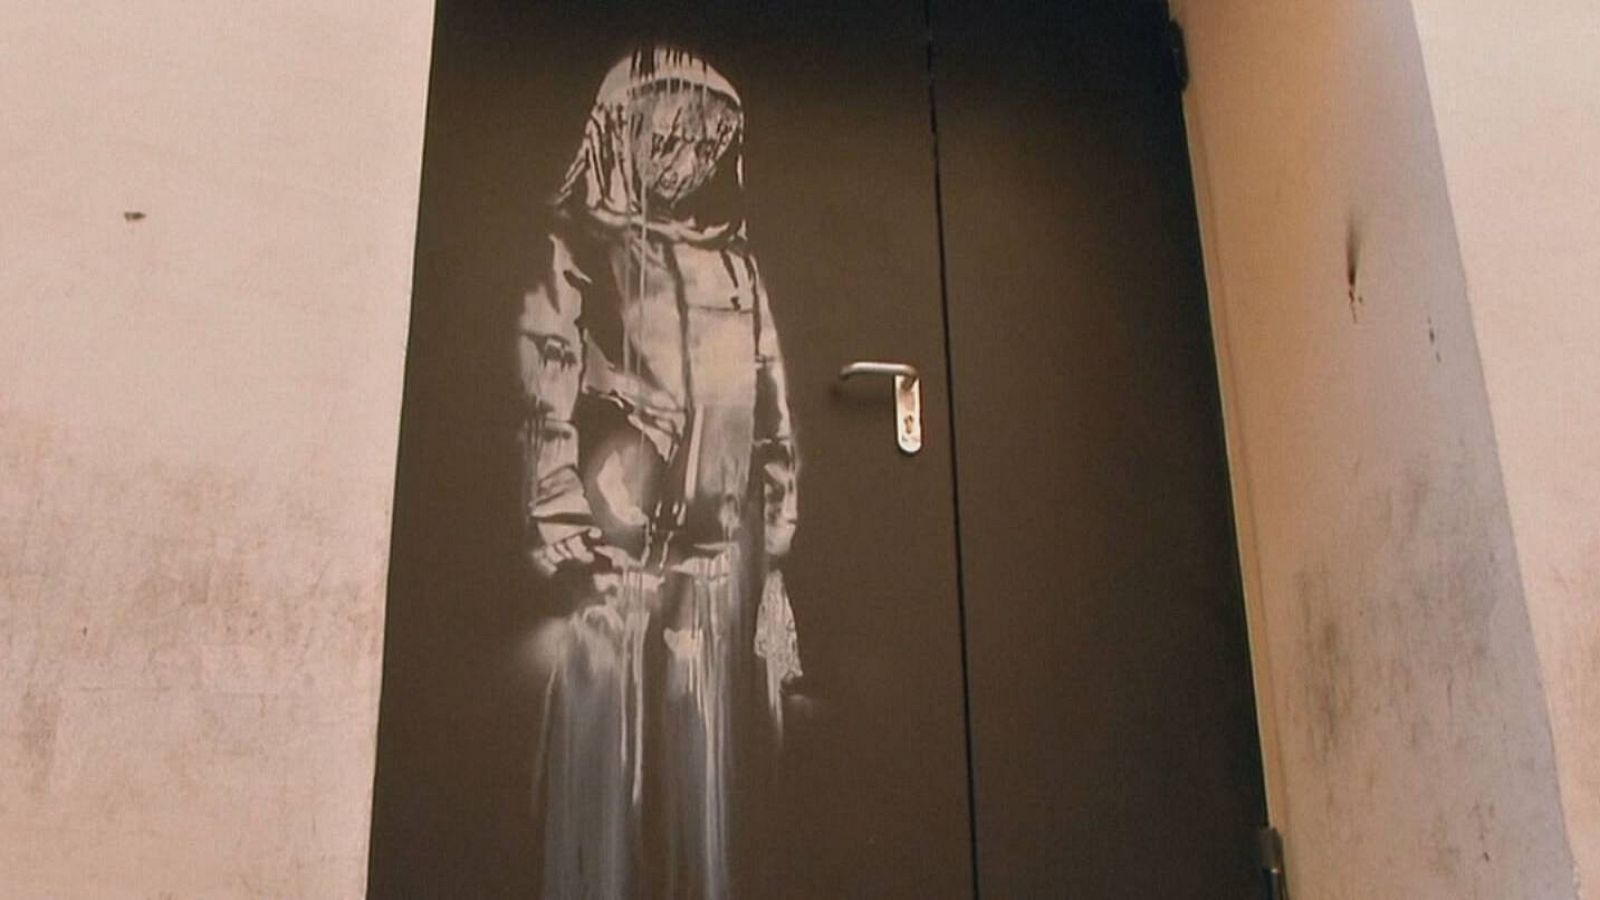 Imagen de "La niña triste" de Banksy.